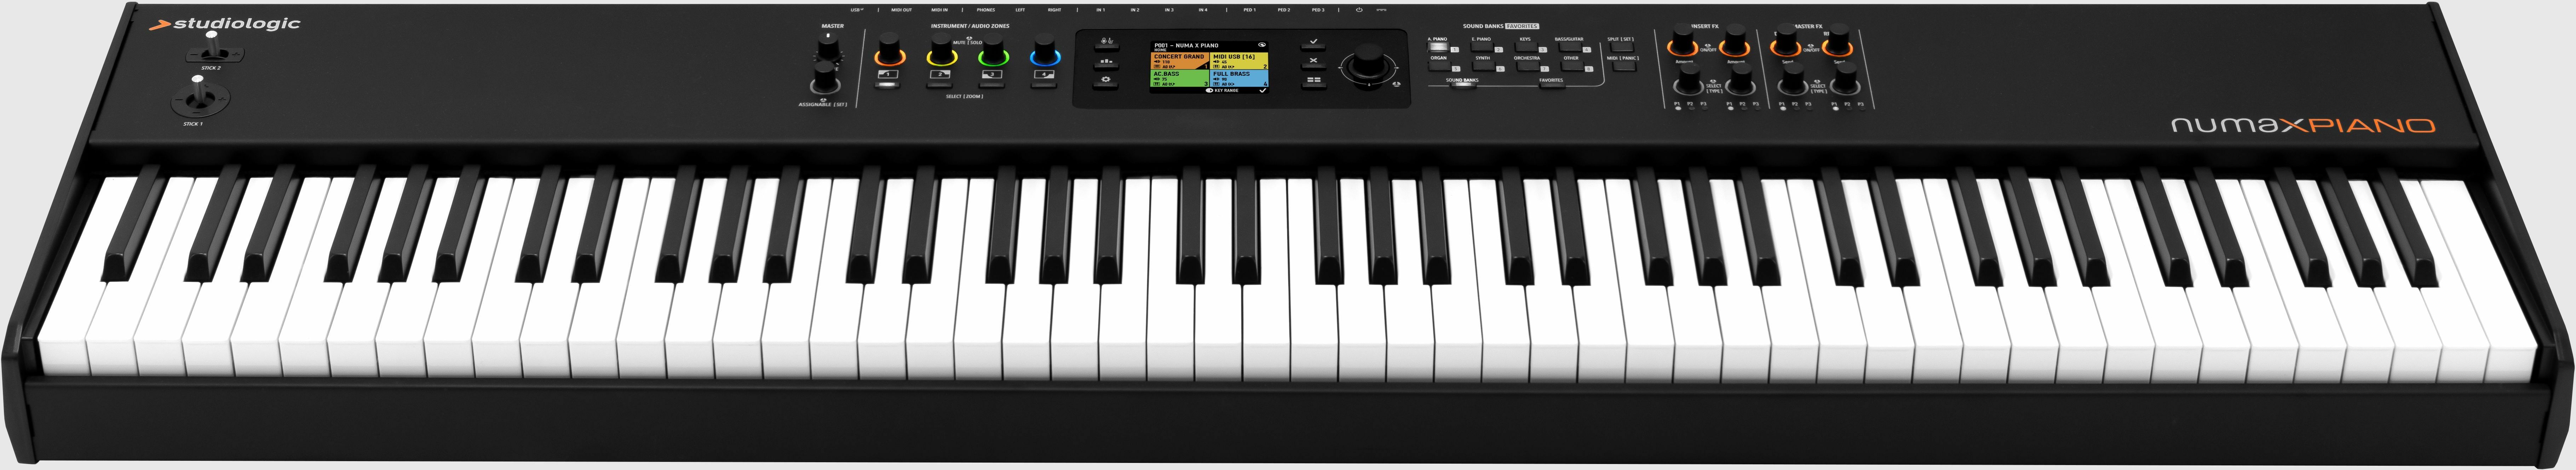 Studiologic Numa X Piano 88 - Stage keyboard - Main picture